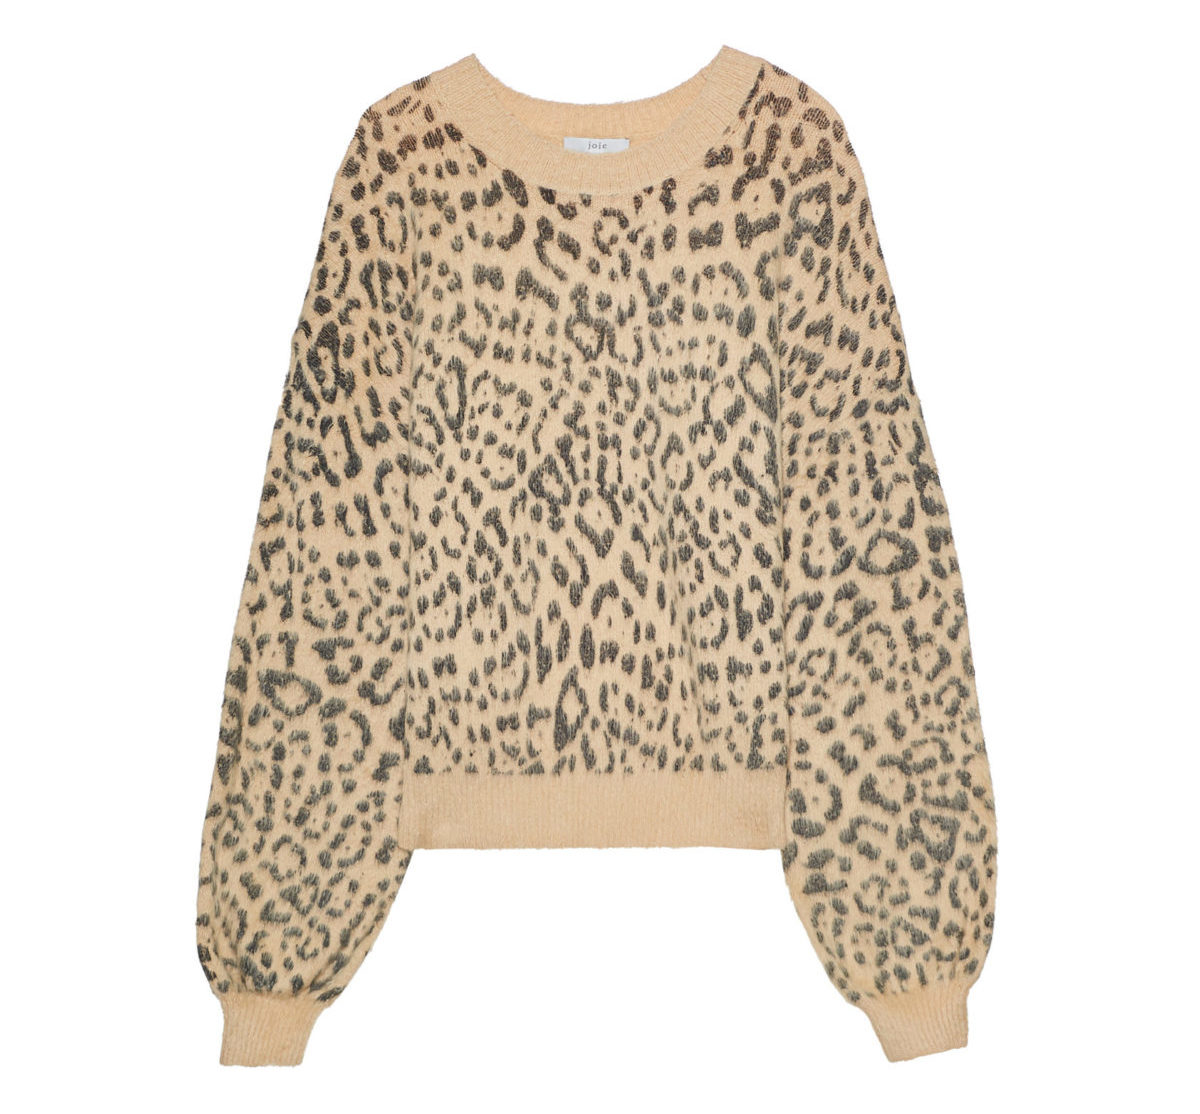 A cheetah print crew neck sweater